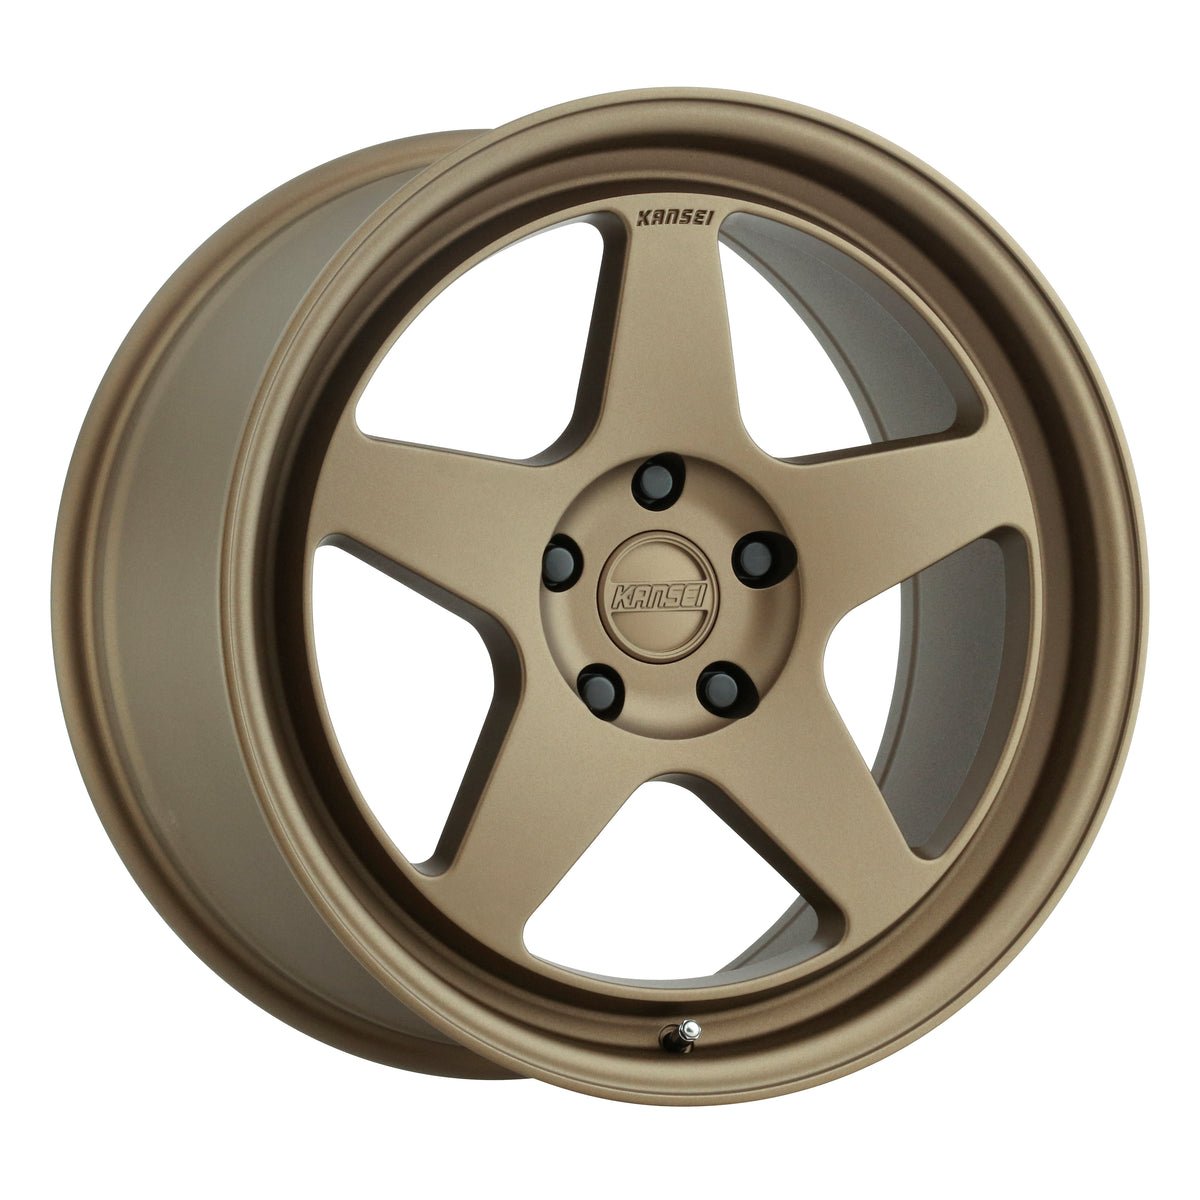 K12B KNP Wheel, Size: 17" x 8.50", Bolt Pattern: 6 x 135 mm, Backspace: 4.36" [Finish: Bronze]